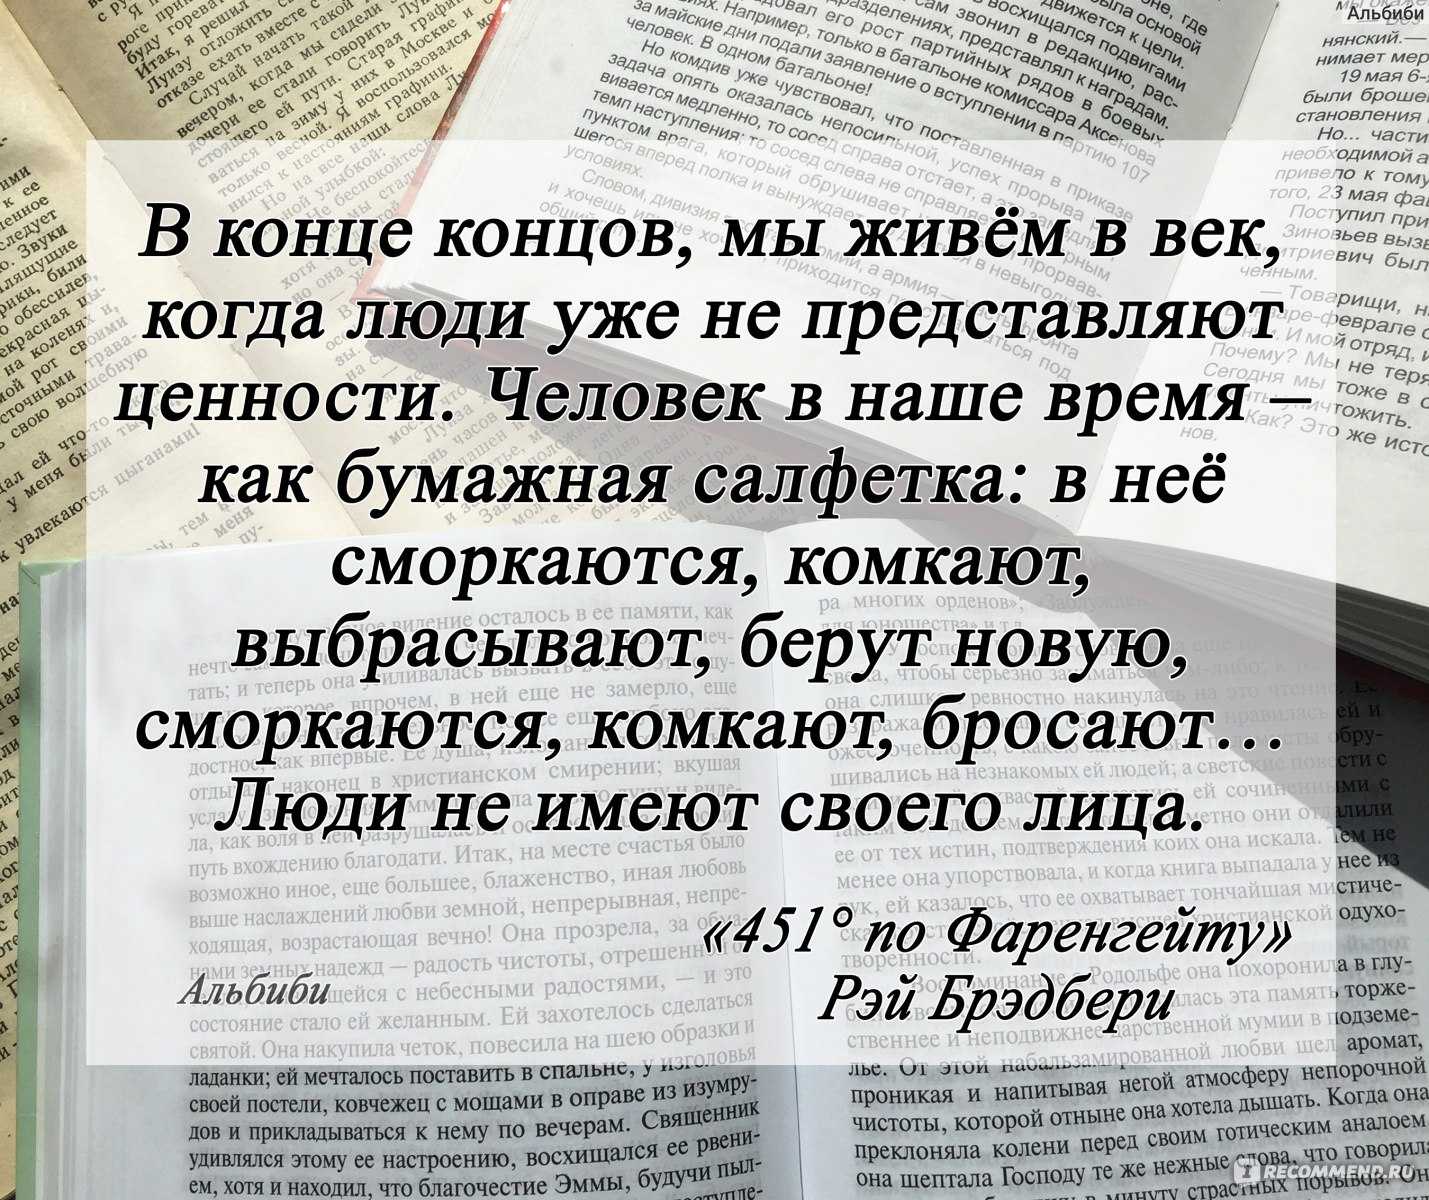 Викторина по роману брэдбери «451 градус по фаренгейту» - quizguess.ru